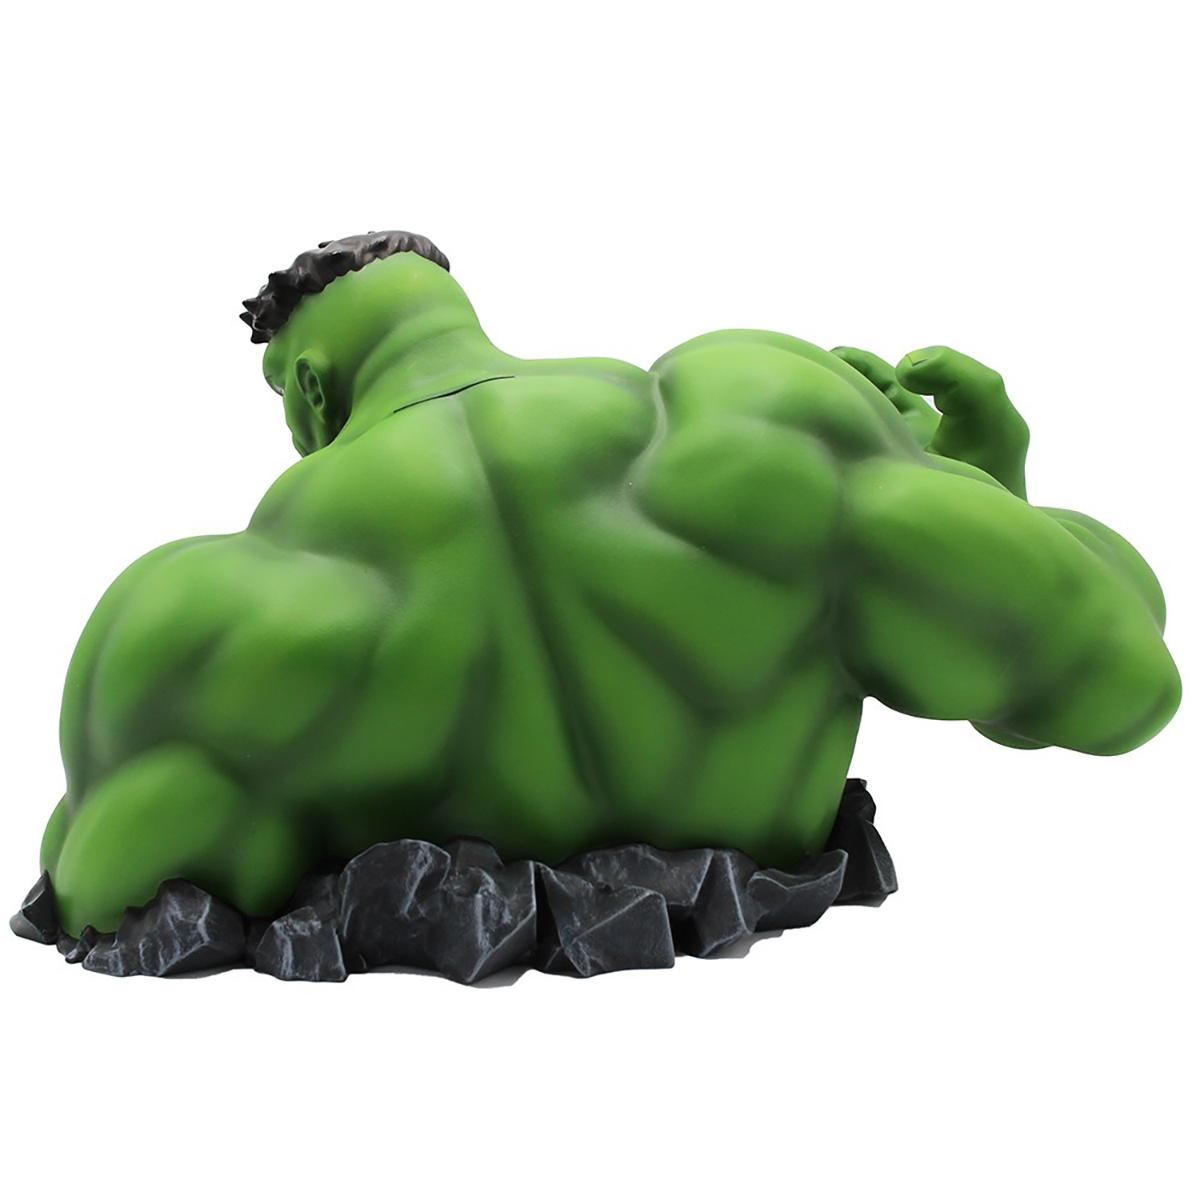 SEMIC DISTRIBUTION Marvel Avengers Spardose Spardose XXL Bank Mega Hulk